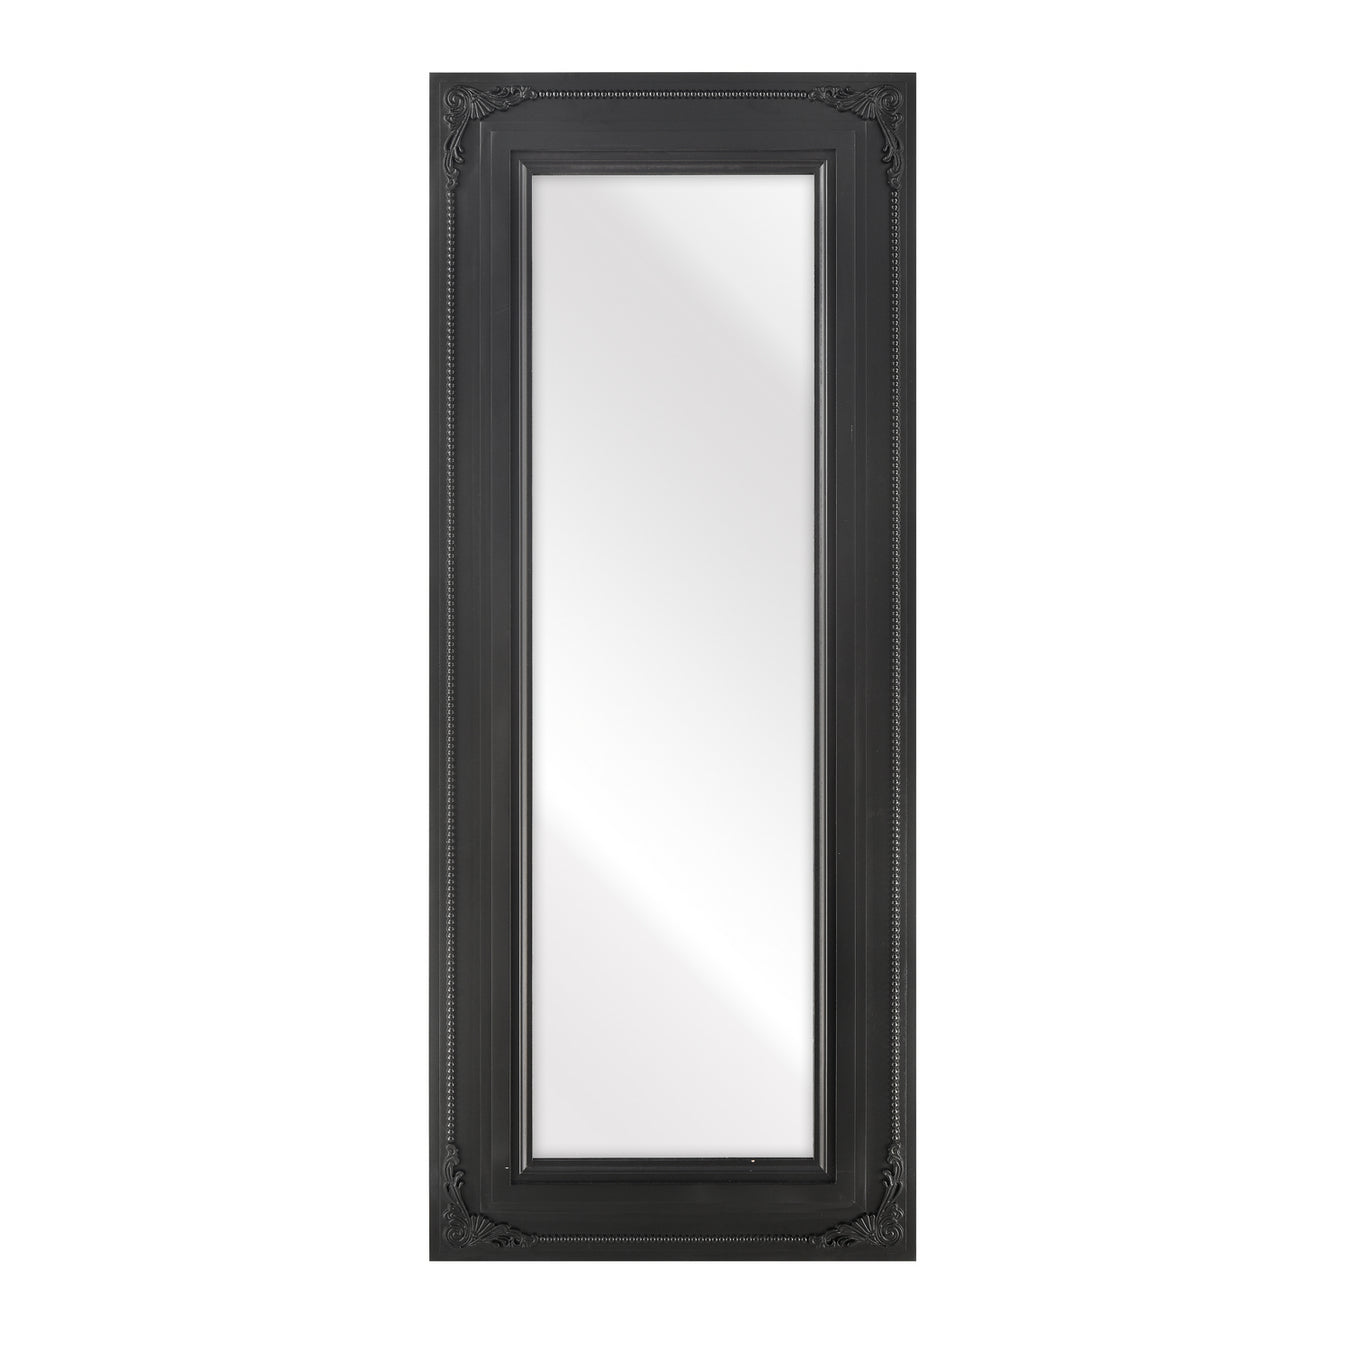 Marla Wall Mirror in Black